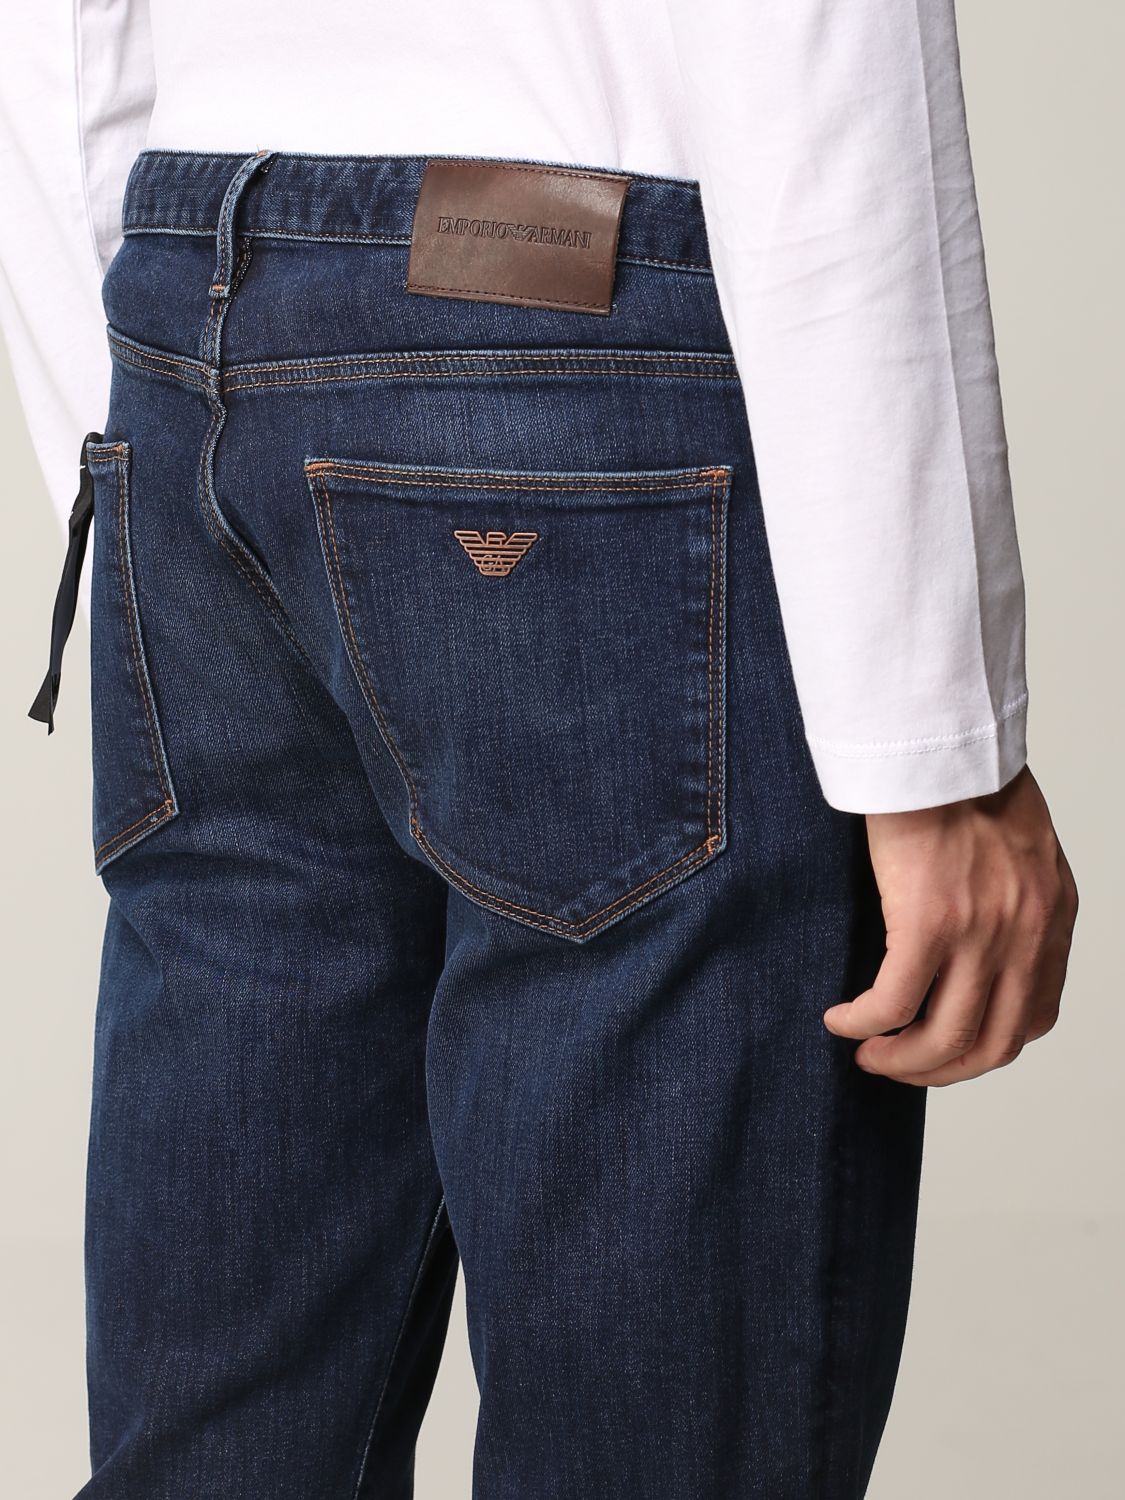 EMPORIO ARMANI: Jeans - Denim | Emporio Jeans 8N1J06 1G0LZ online auf GIGLIO.COM